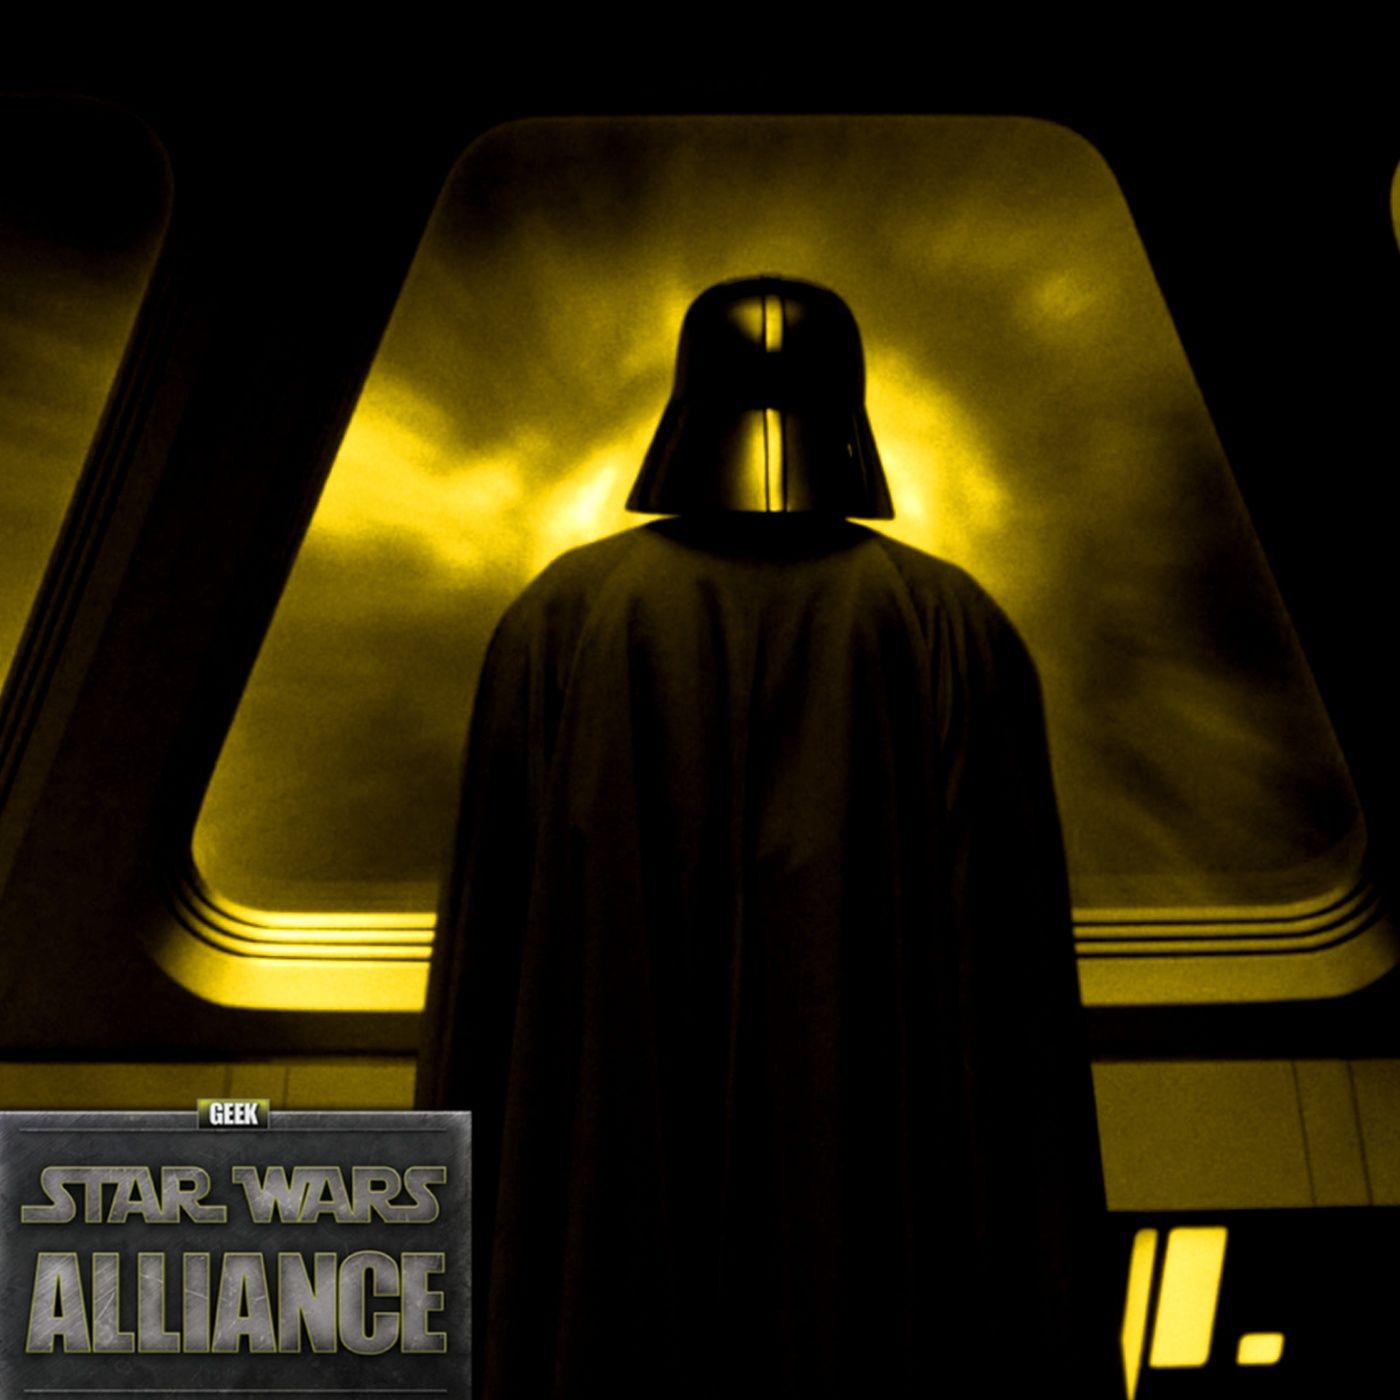 Obi Wan Episode 5 Spoiler Breakdown: Star Wars Alliance LXXVII